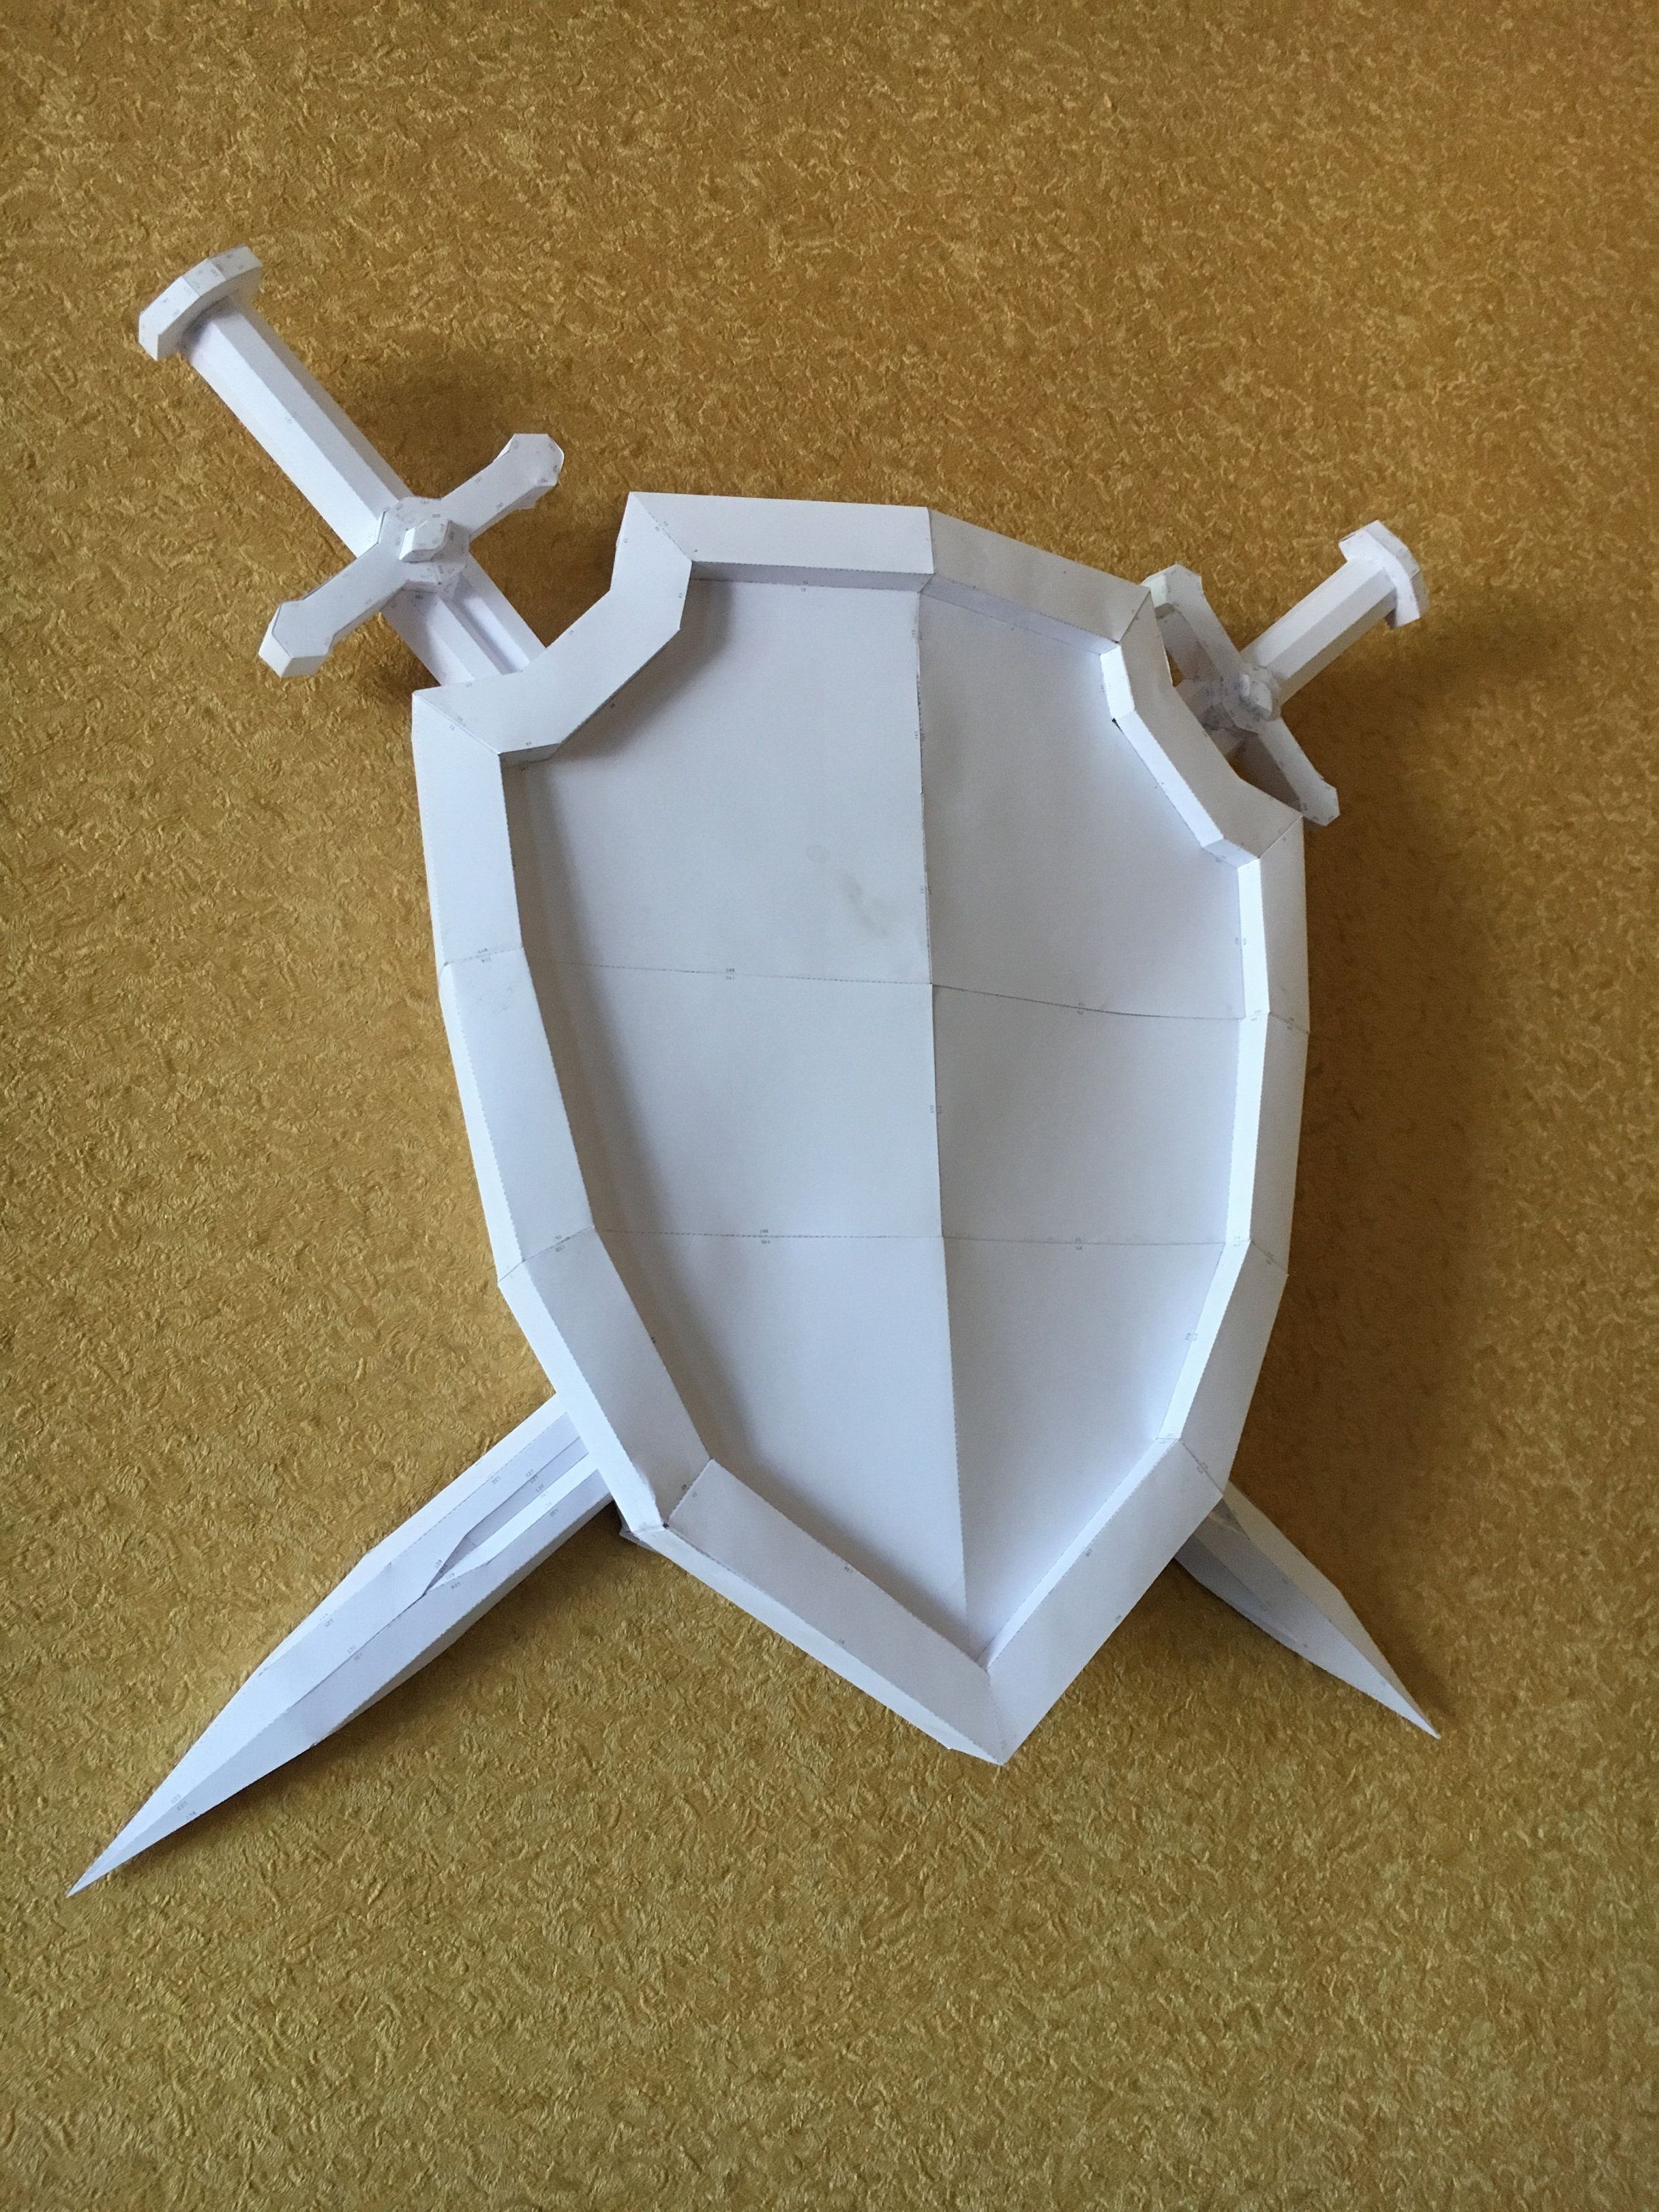 Sci Fi Papercraft Sword Shield Diy Papercraft Model ÐÑÐ¼Ð°Ð¶Ð½ÑÐµ Ð¸Ð·Ð´ÐµÐ Ð¸Ñ